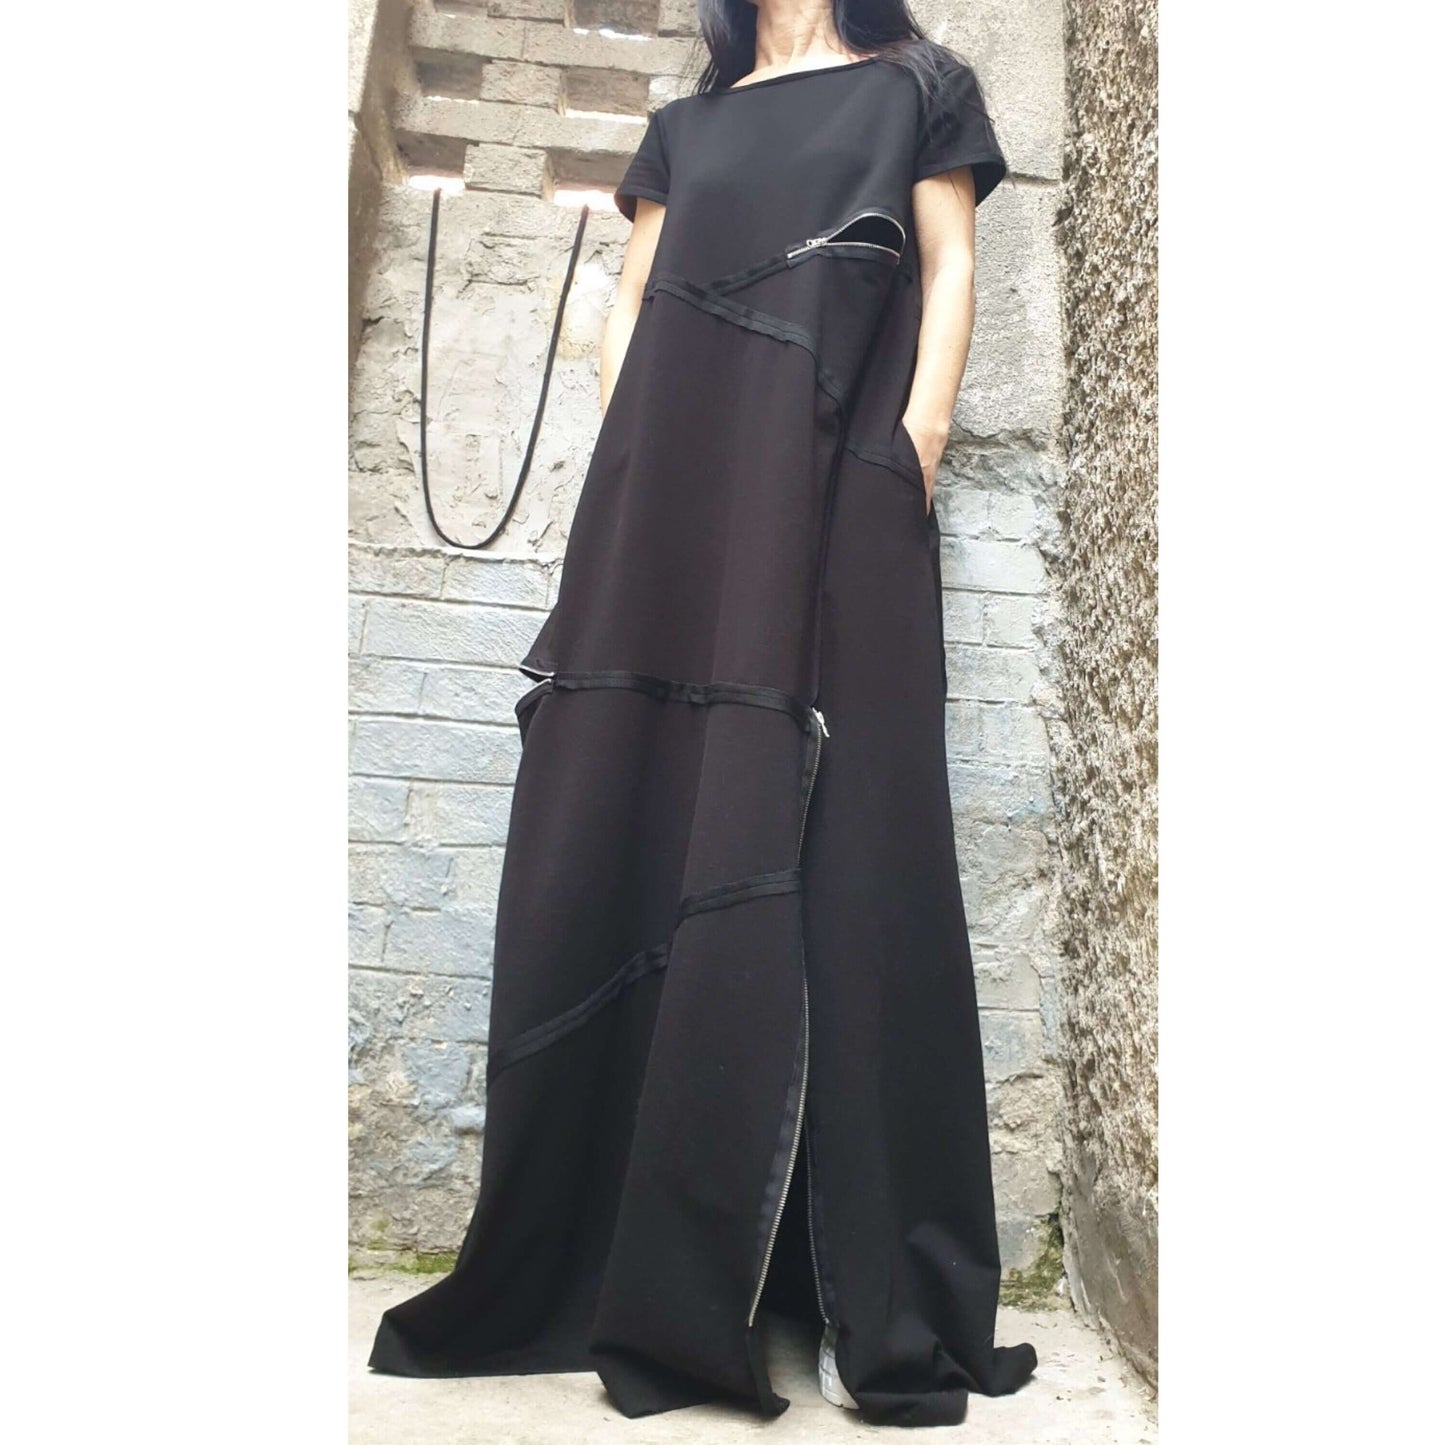 Extravagant Long Dress - Handmade clothing from AngelBySilvia - Top Designer Brands 